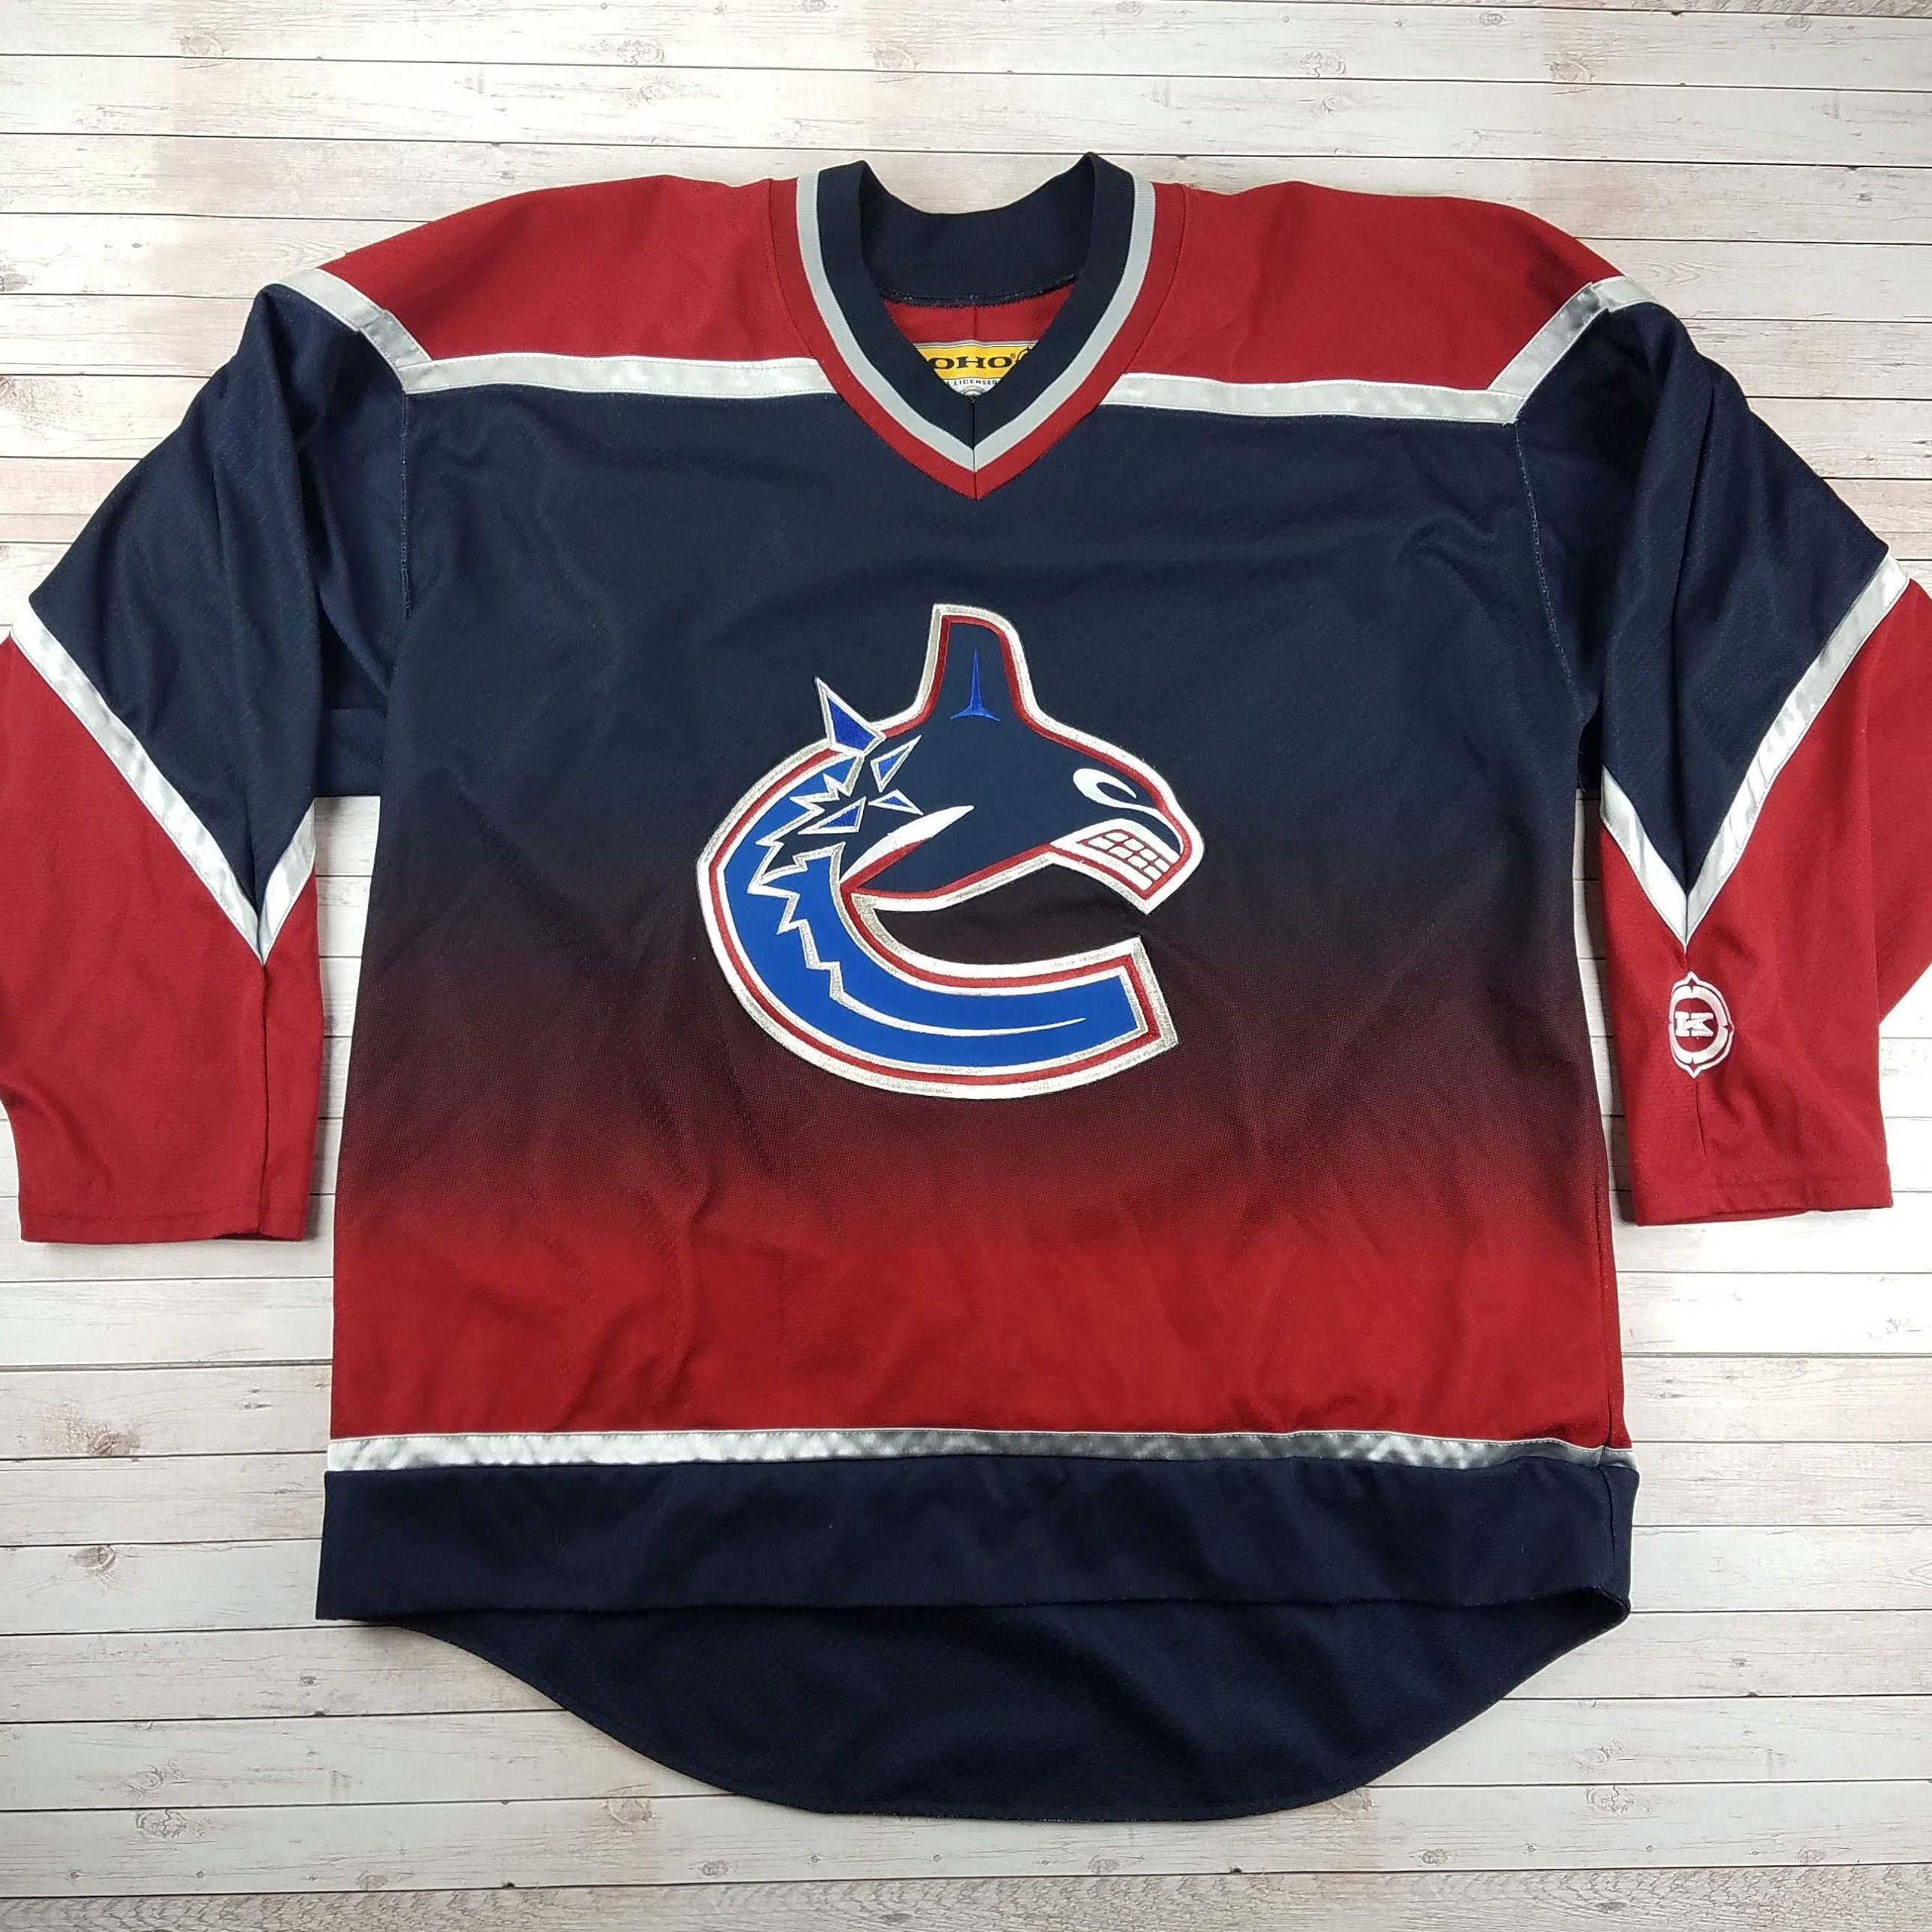 00's Columbus Blue Jackets Koho NHL Jersey Size Medium – Rare VNTG